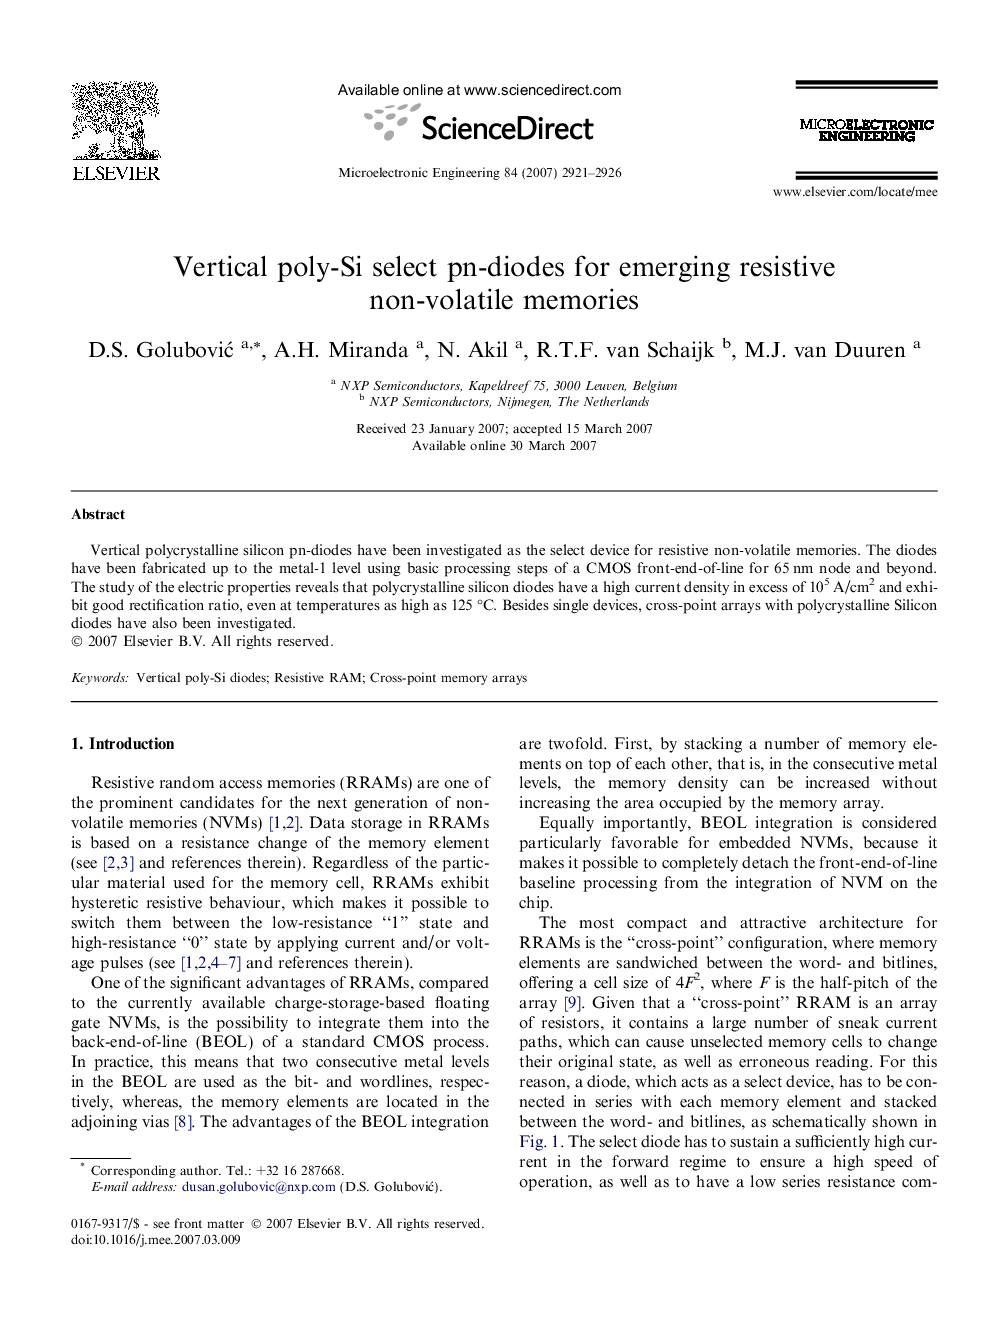 Vertical poly-Si select pn-diodes for emerging resistive non-volatile memories